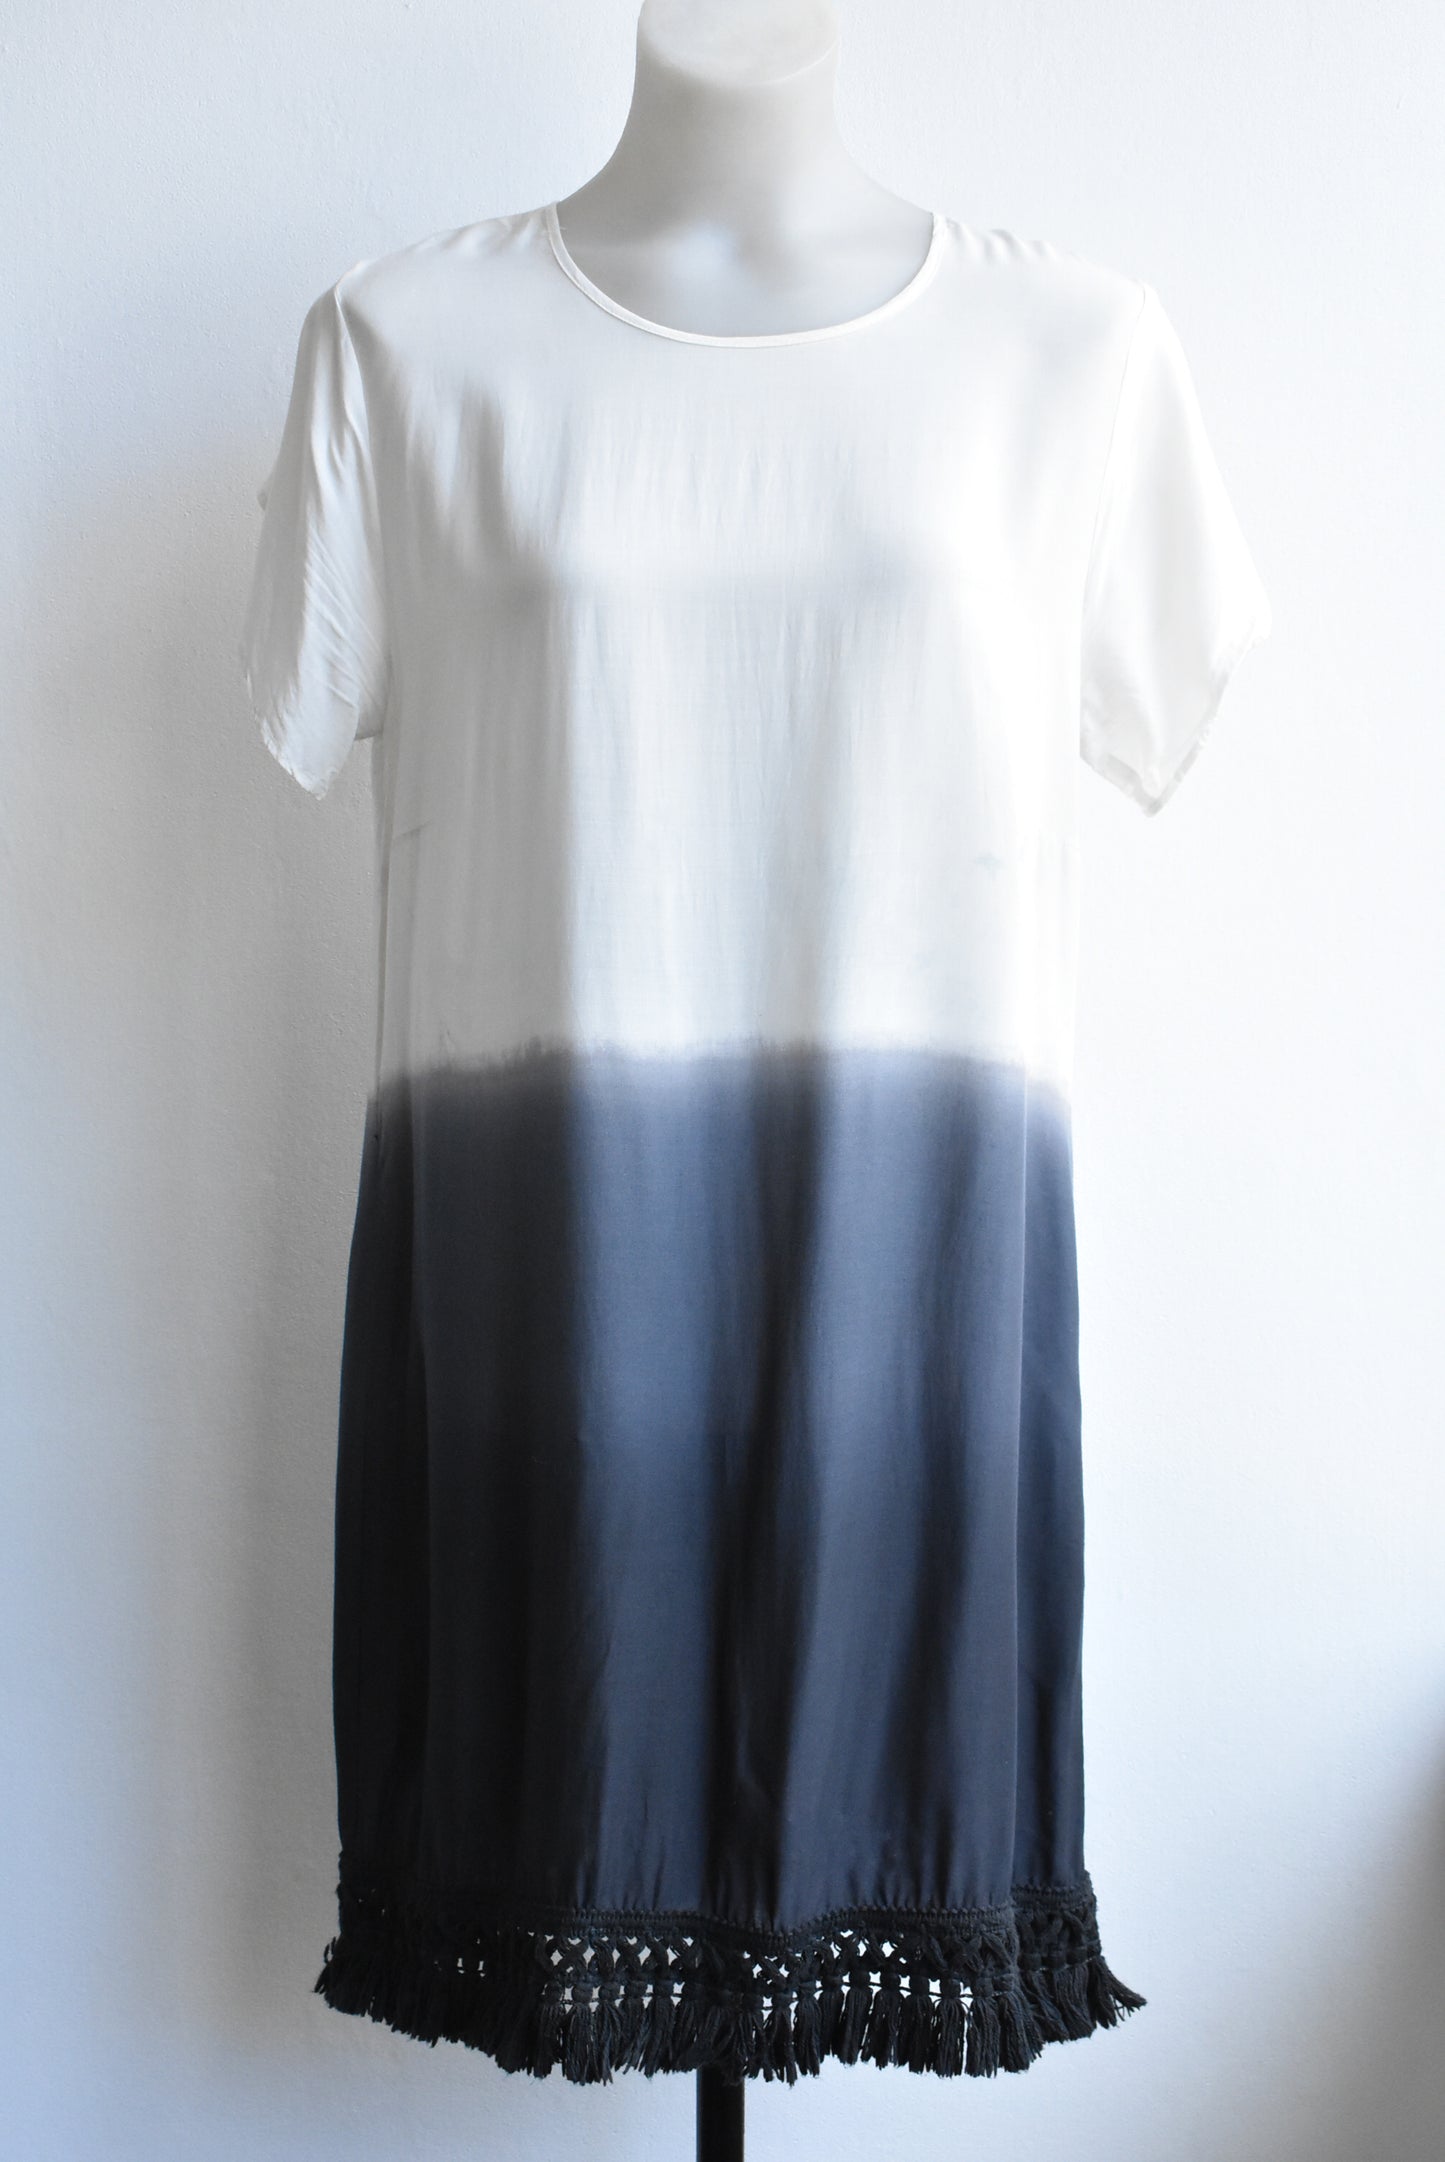 Blak gradient shift dress, 14